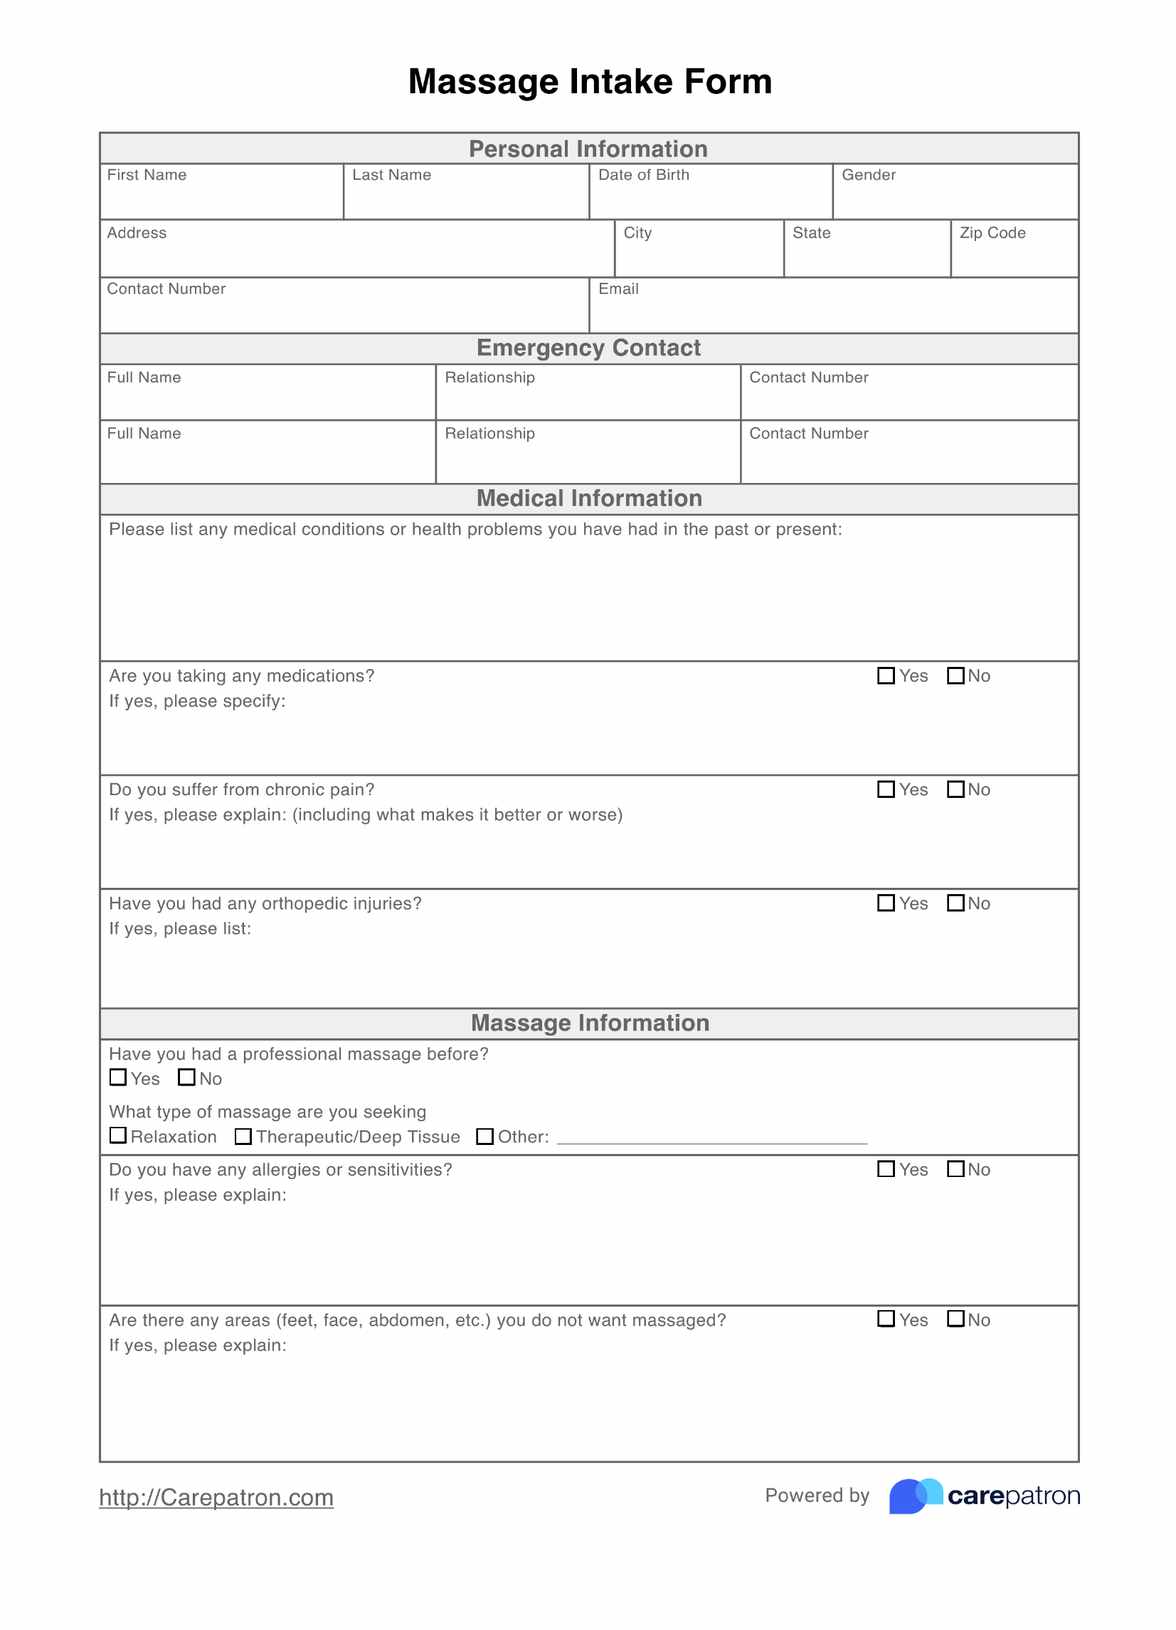 Massage Intake Form PDF Example